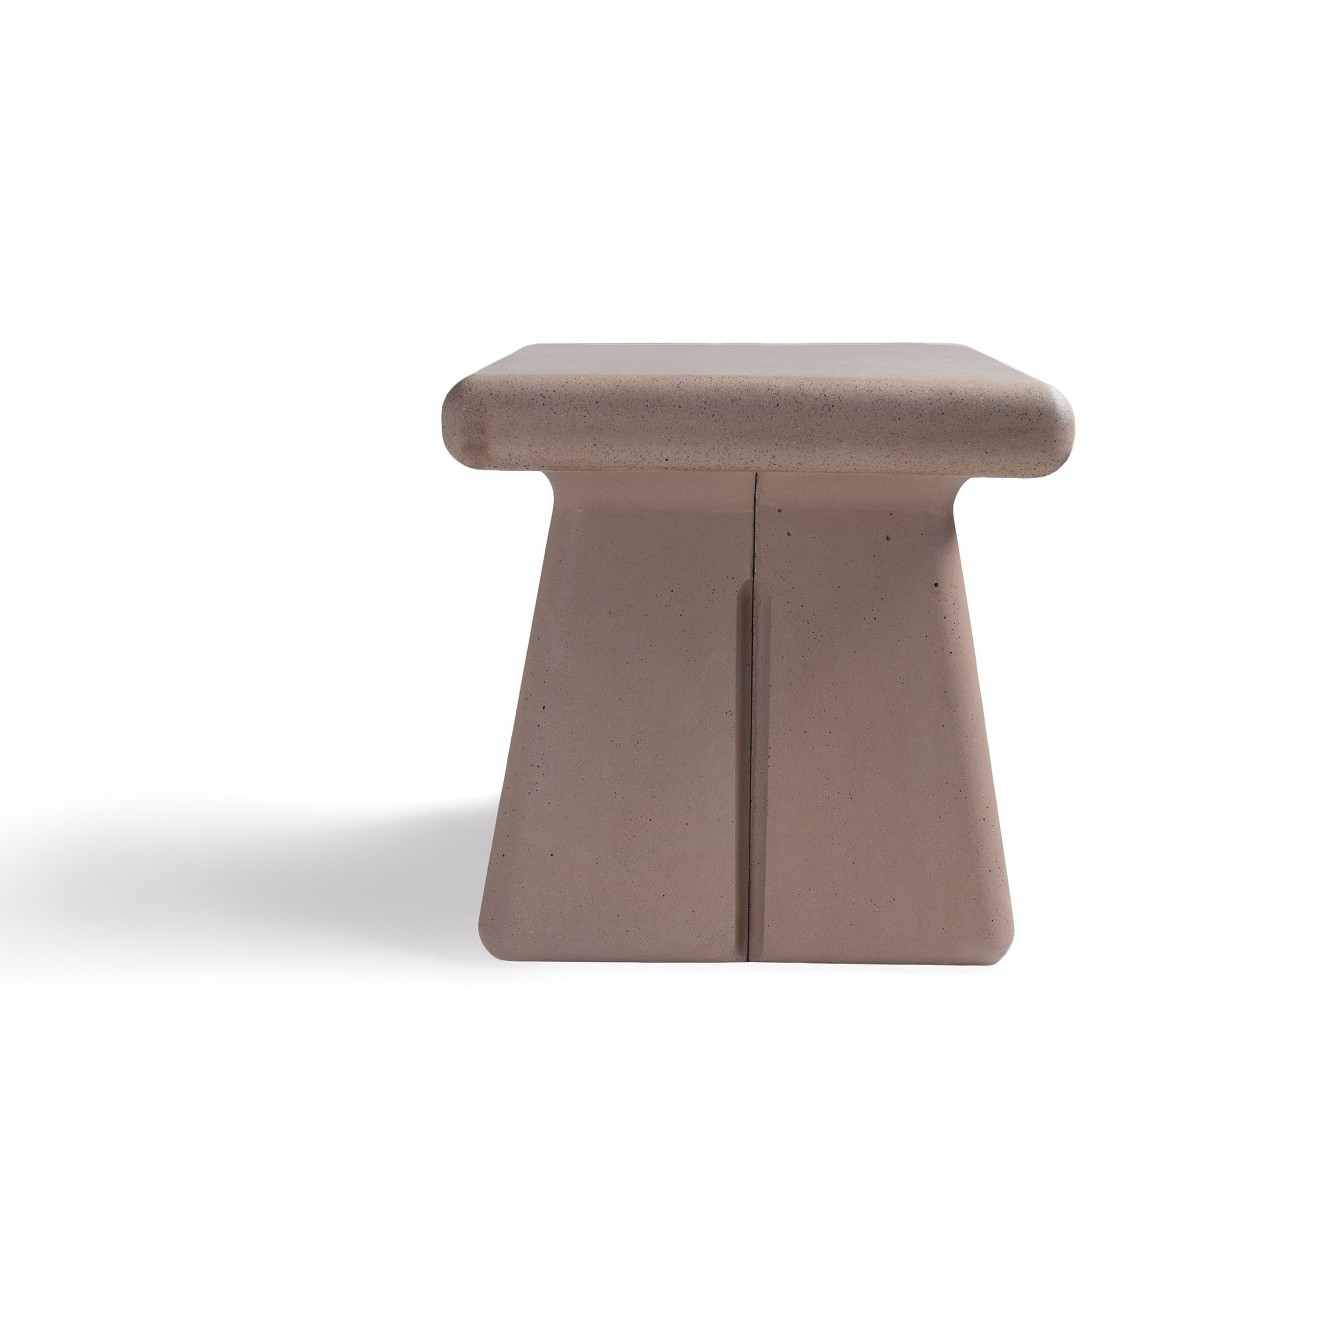 Cube tan cement stool by sotiris lazou design studio 